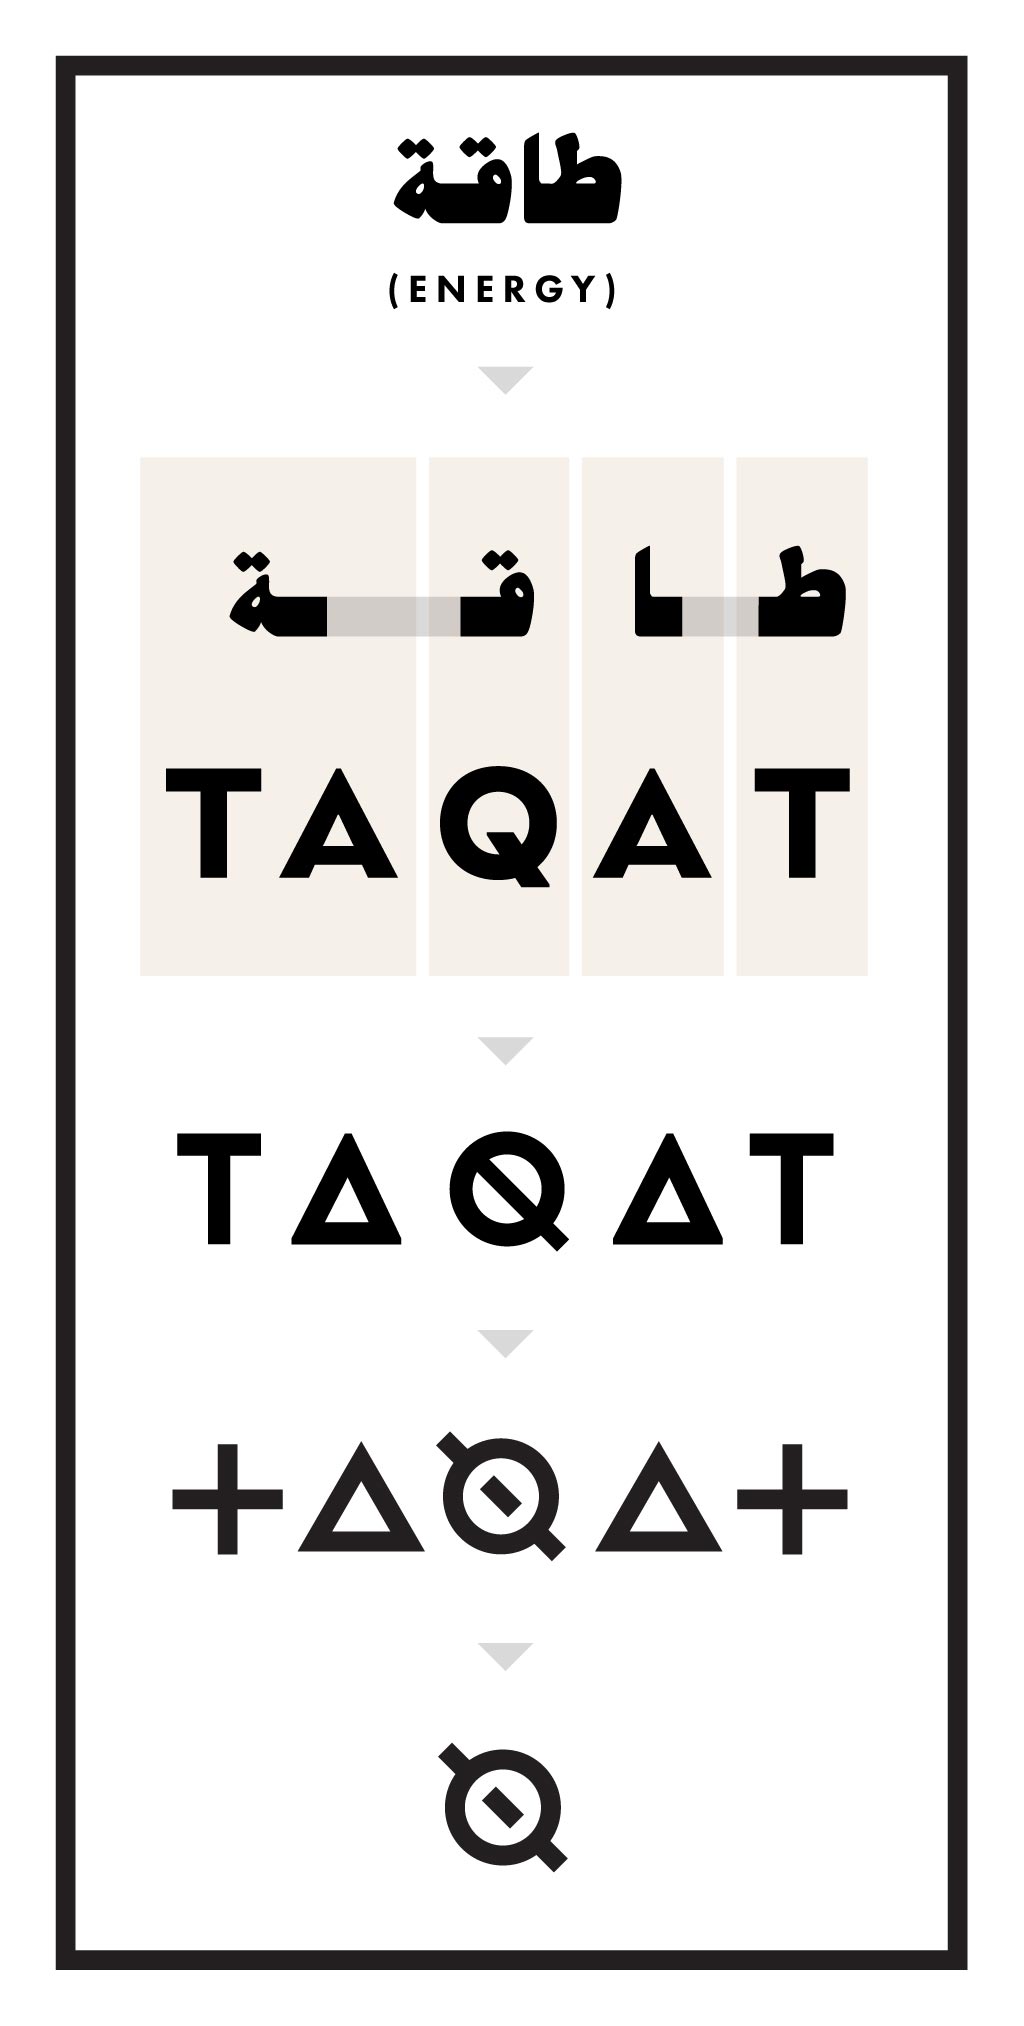 Logo logic: from transliterated arabic to symbol